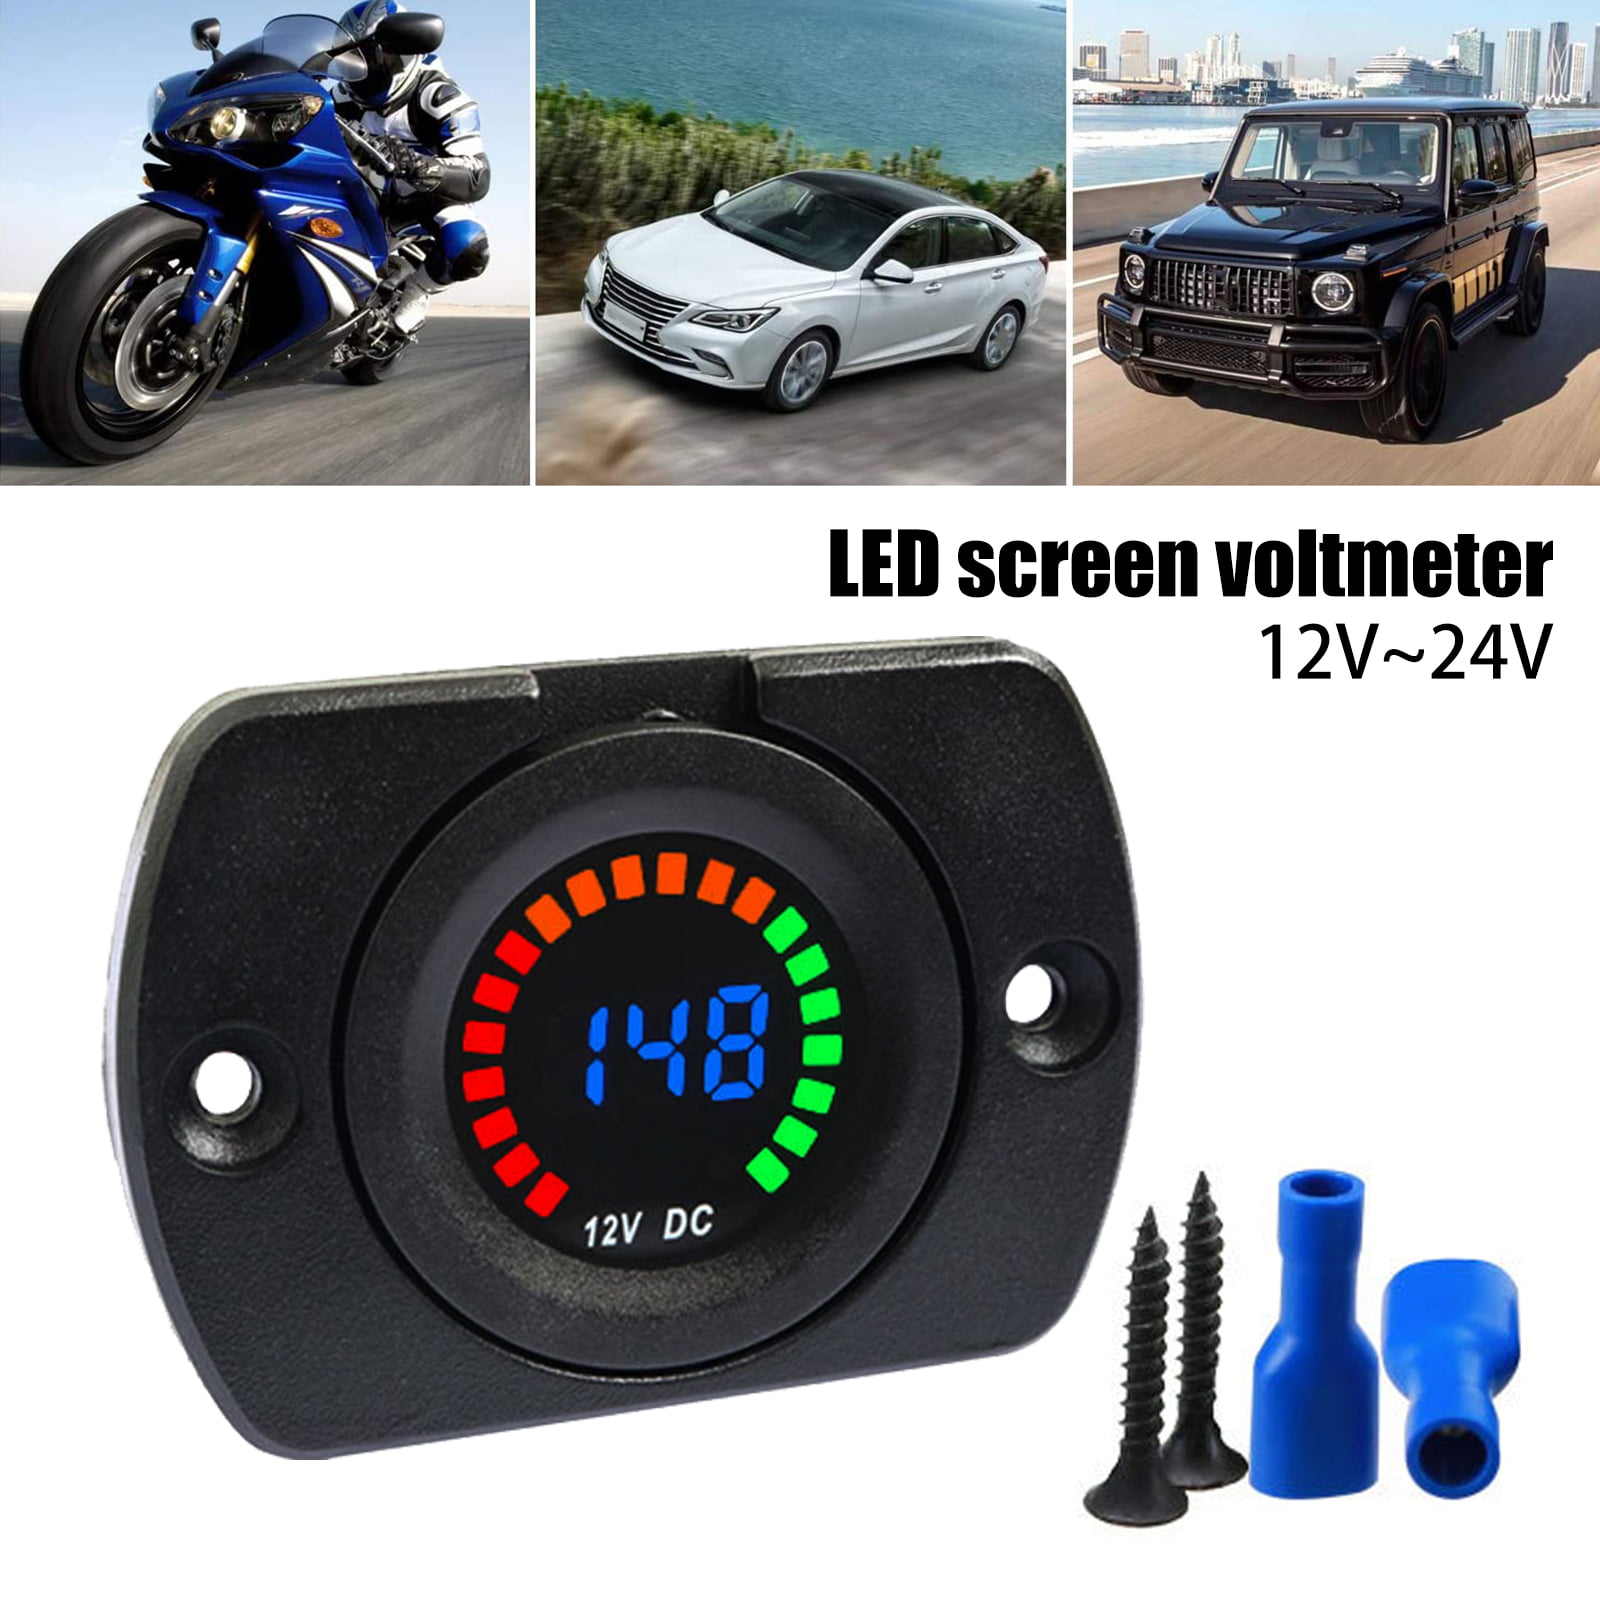 Cllena Waterproof LED Digital Display Voltmeter 12-24V DC for Car Motorcycle Boat Marine Truck Rv ATV Blue LED